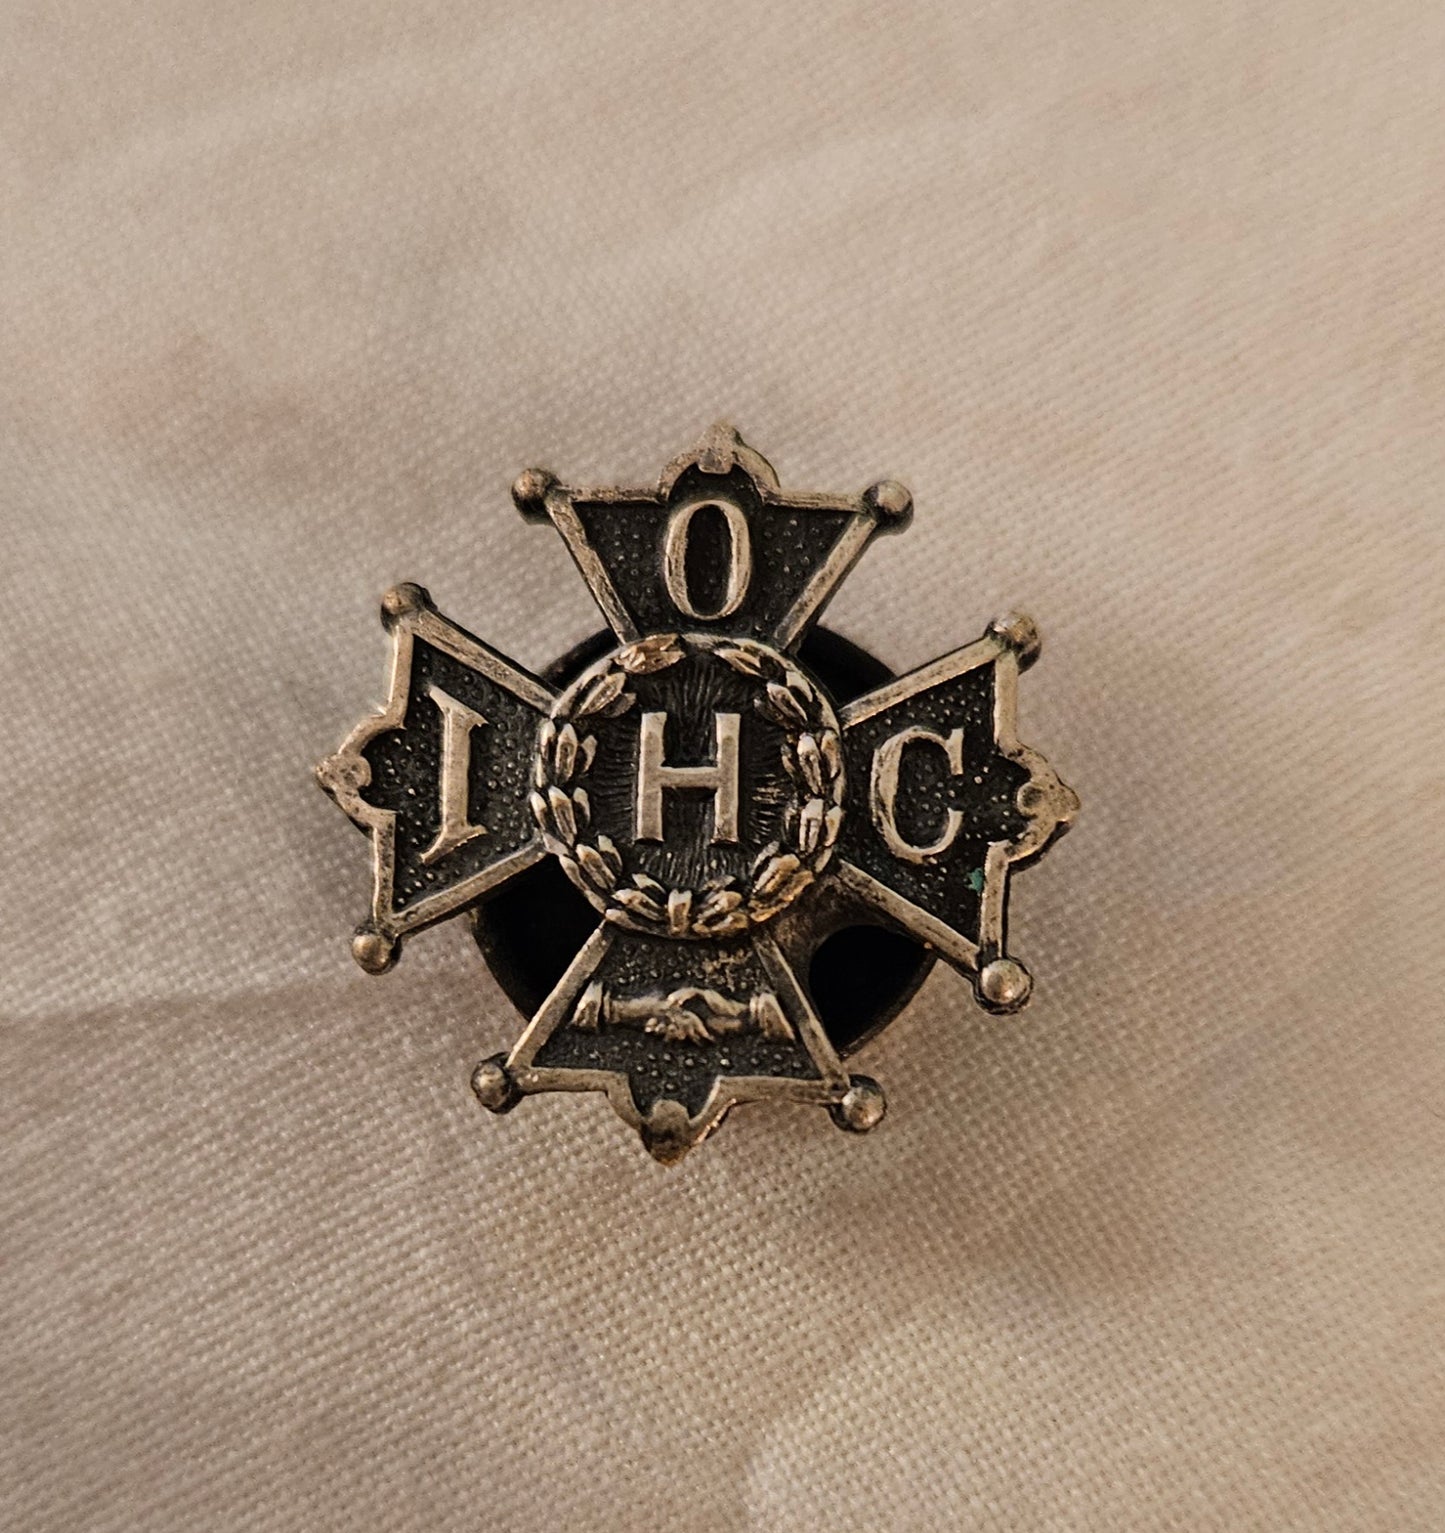 OIHC Fraternal Organization Button by Whitehead & Hoag Co.